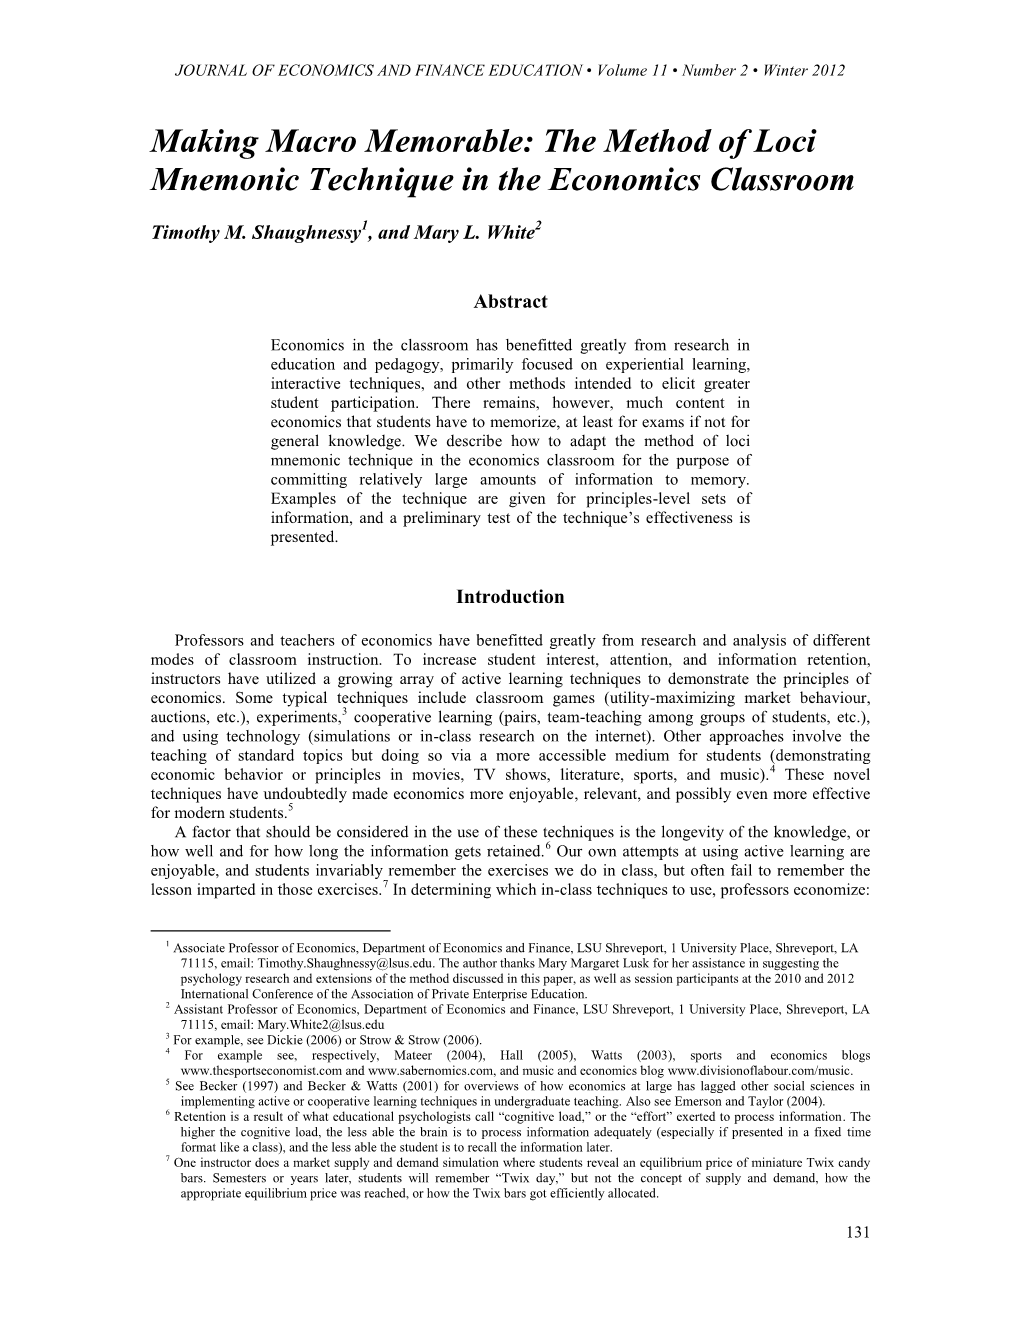 Making Macro Memorable: the Method of Loci Mnemonic Technique in the Economics Classroom